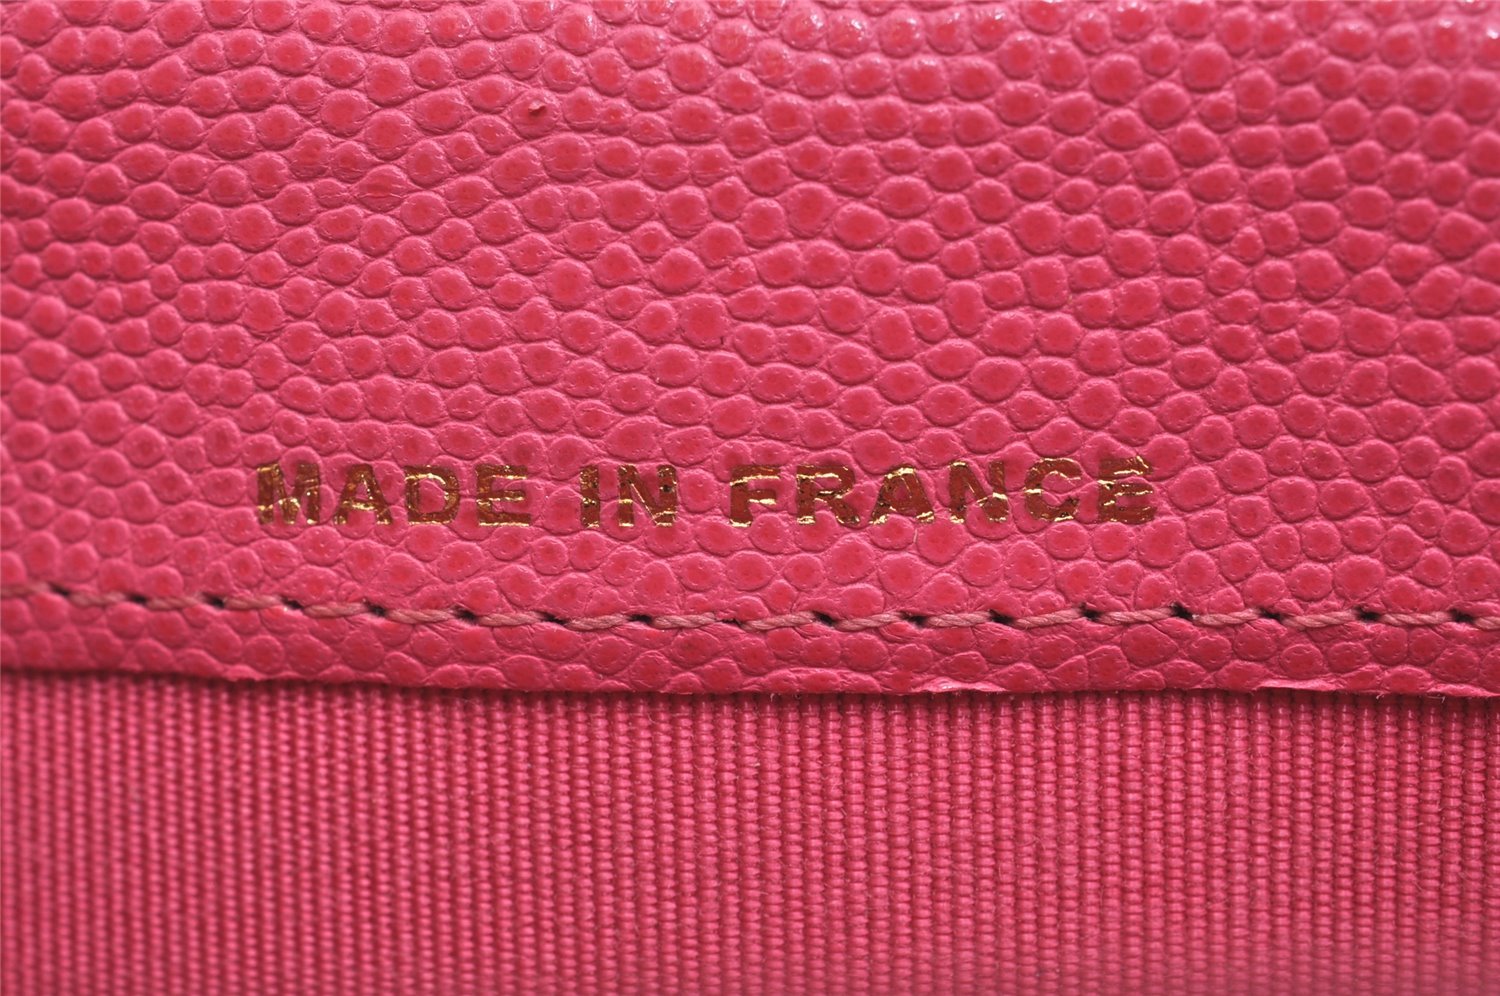 Authentic CHANEL Caviar Skin Matelasse Long Wallet Purse CC Logo Pink Box 5204J